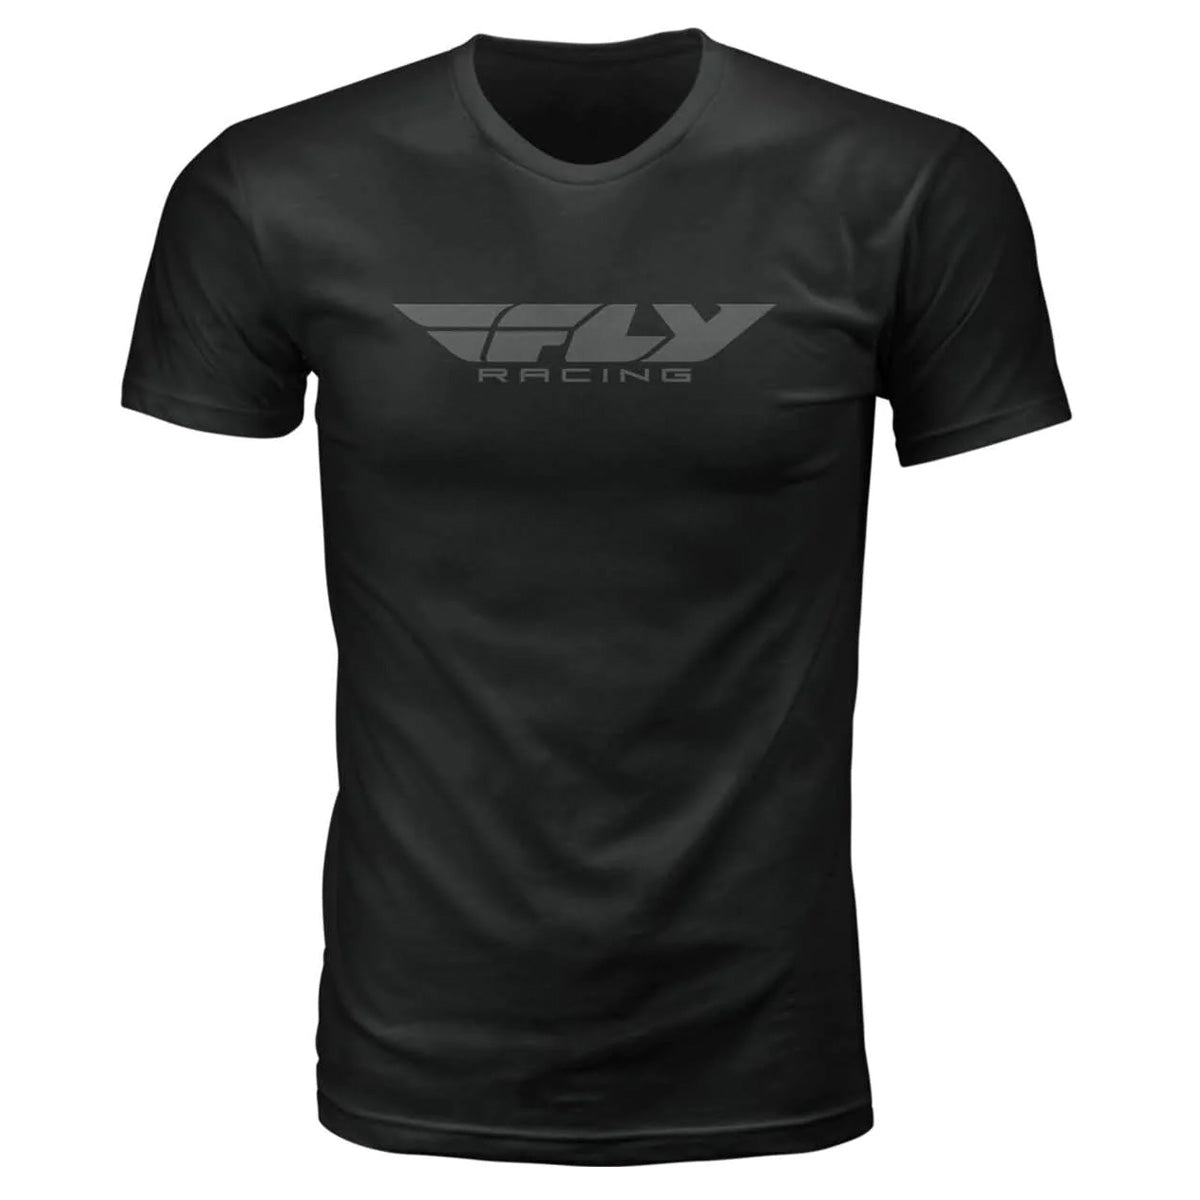 Fly Racing Corporate Men's Short-Sleeve Shirts